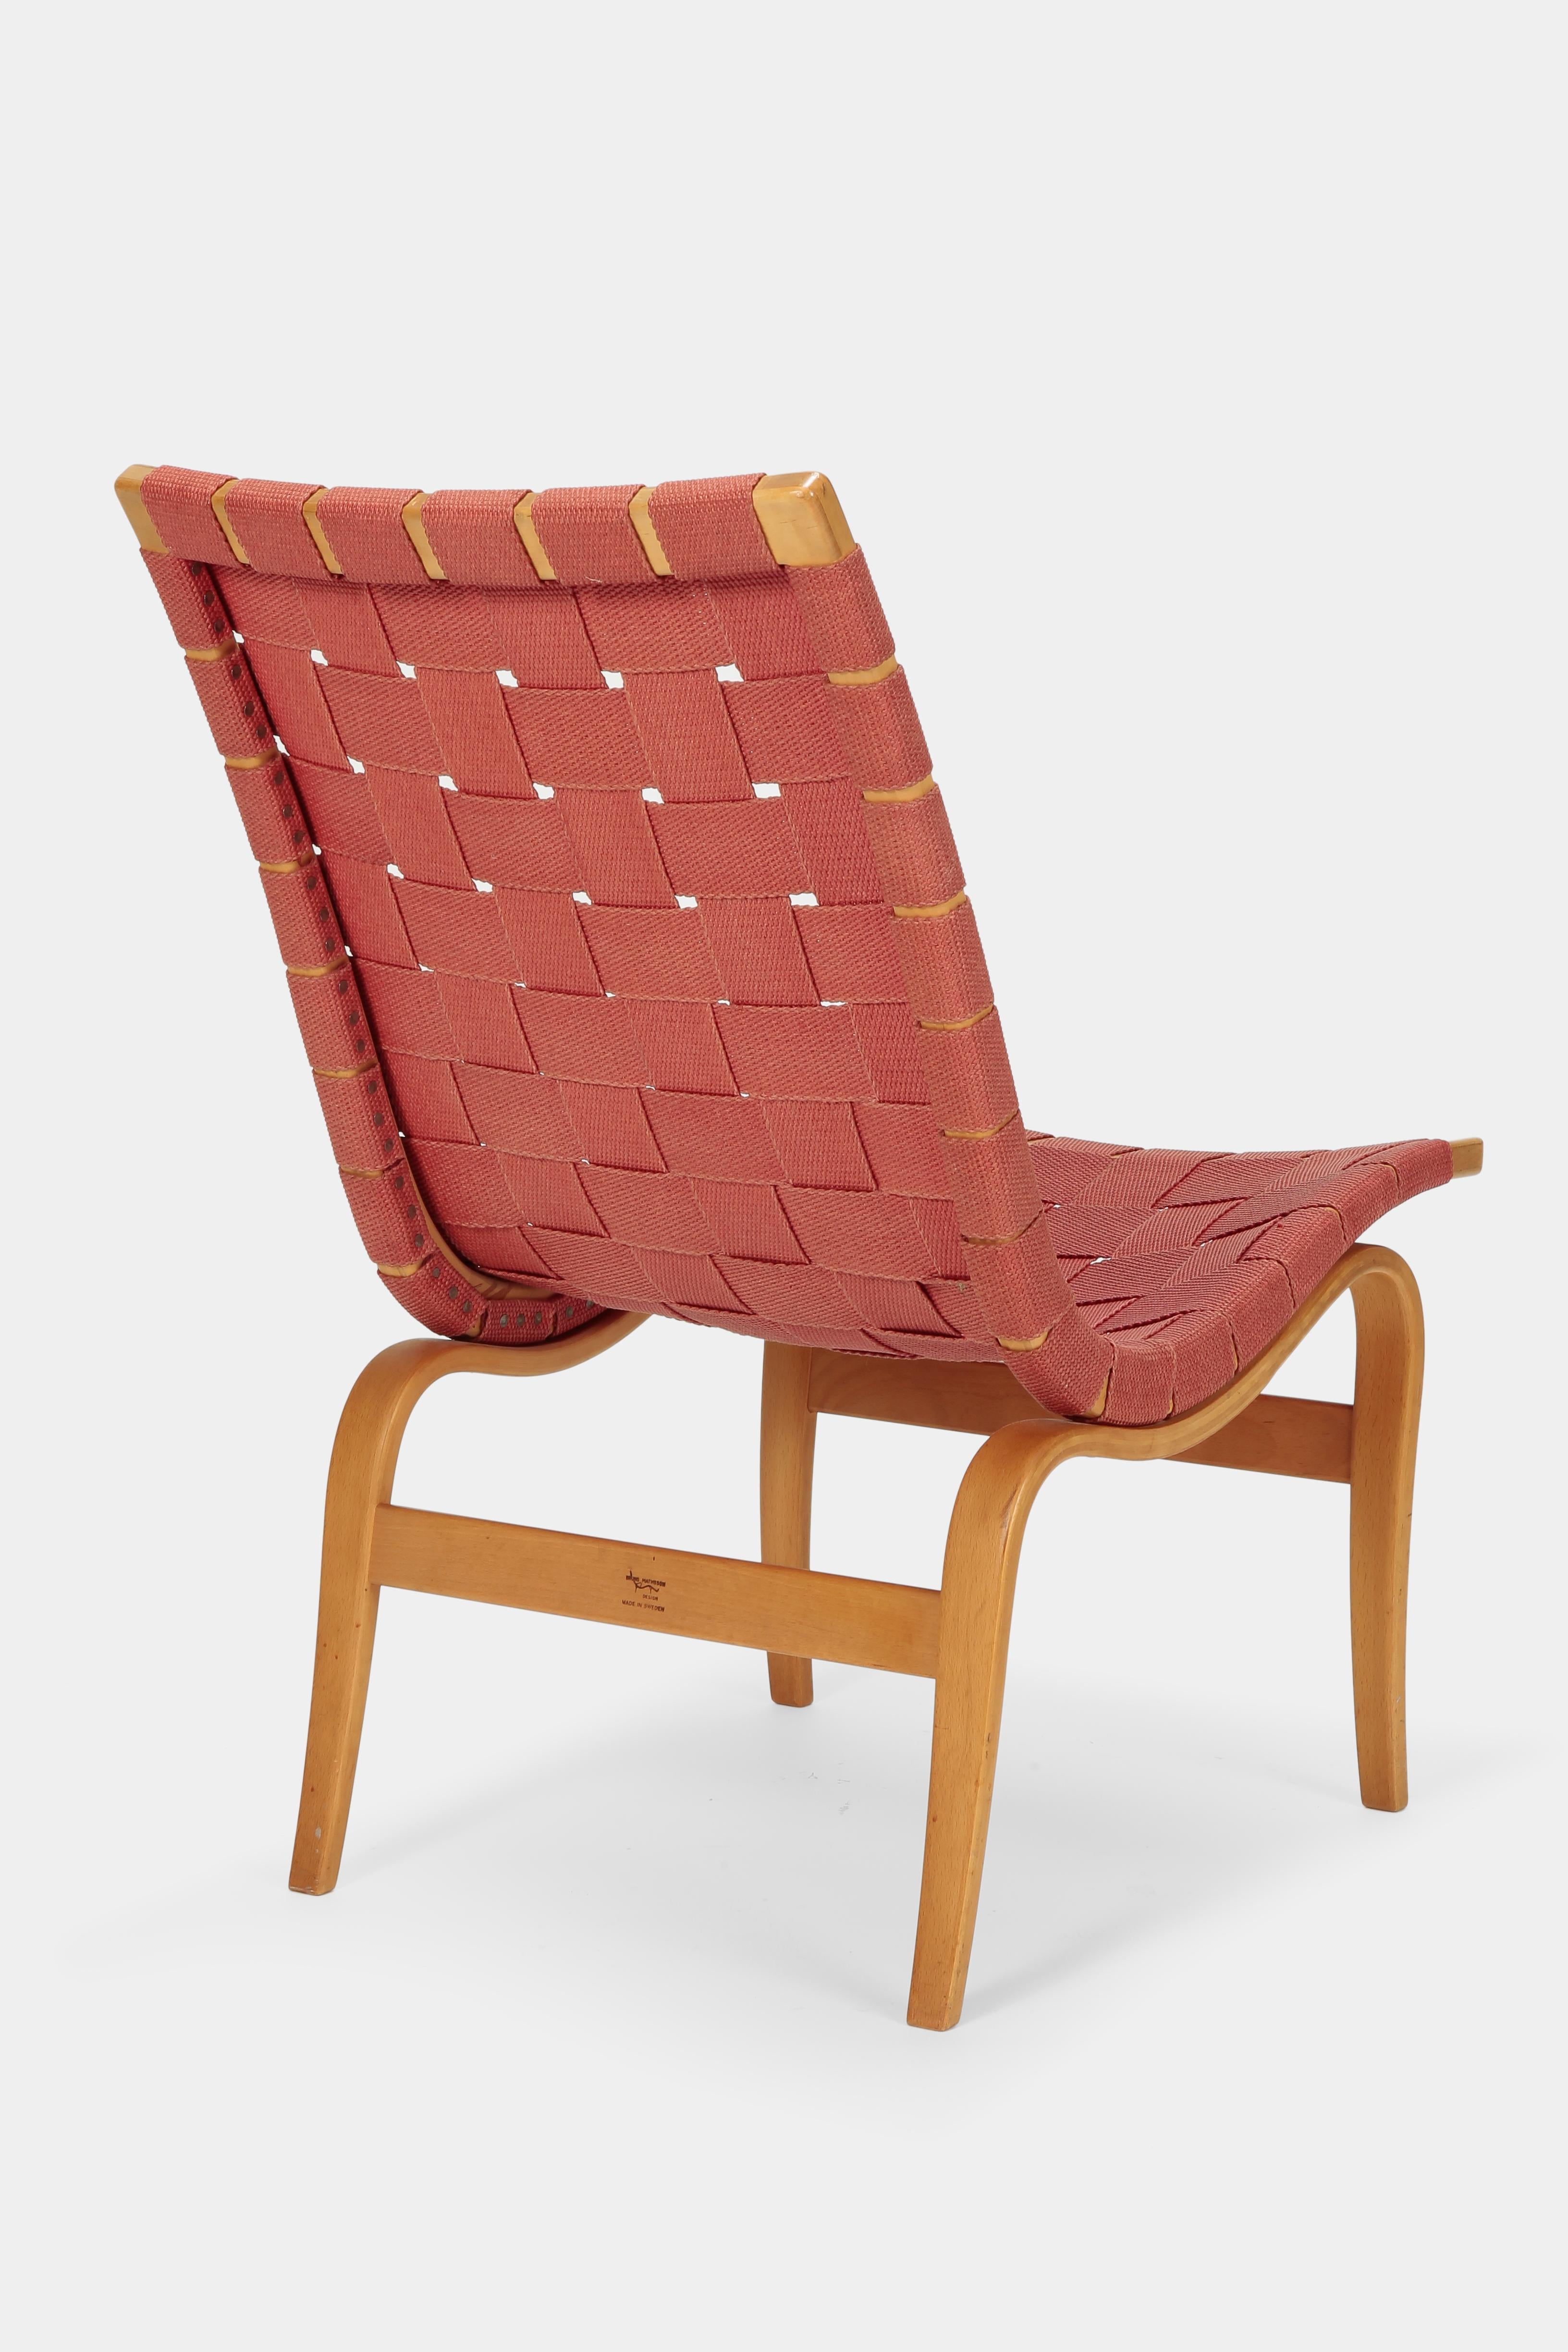 Swedish Bruno Mathsson ‘Eva’ Chair 1941 For Sale